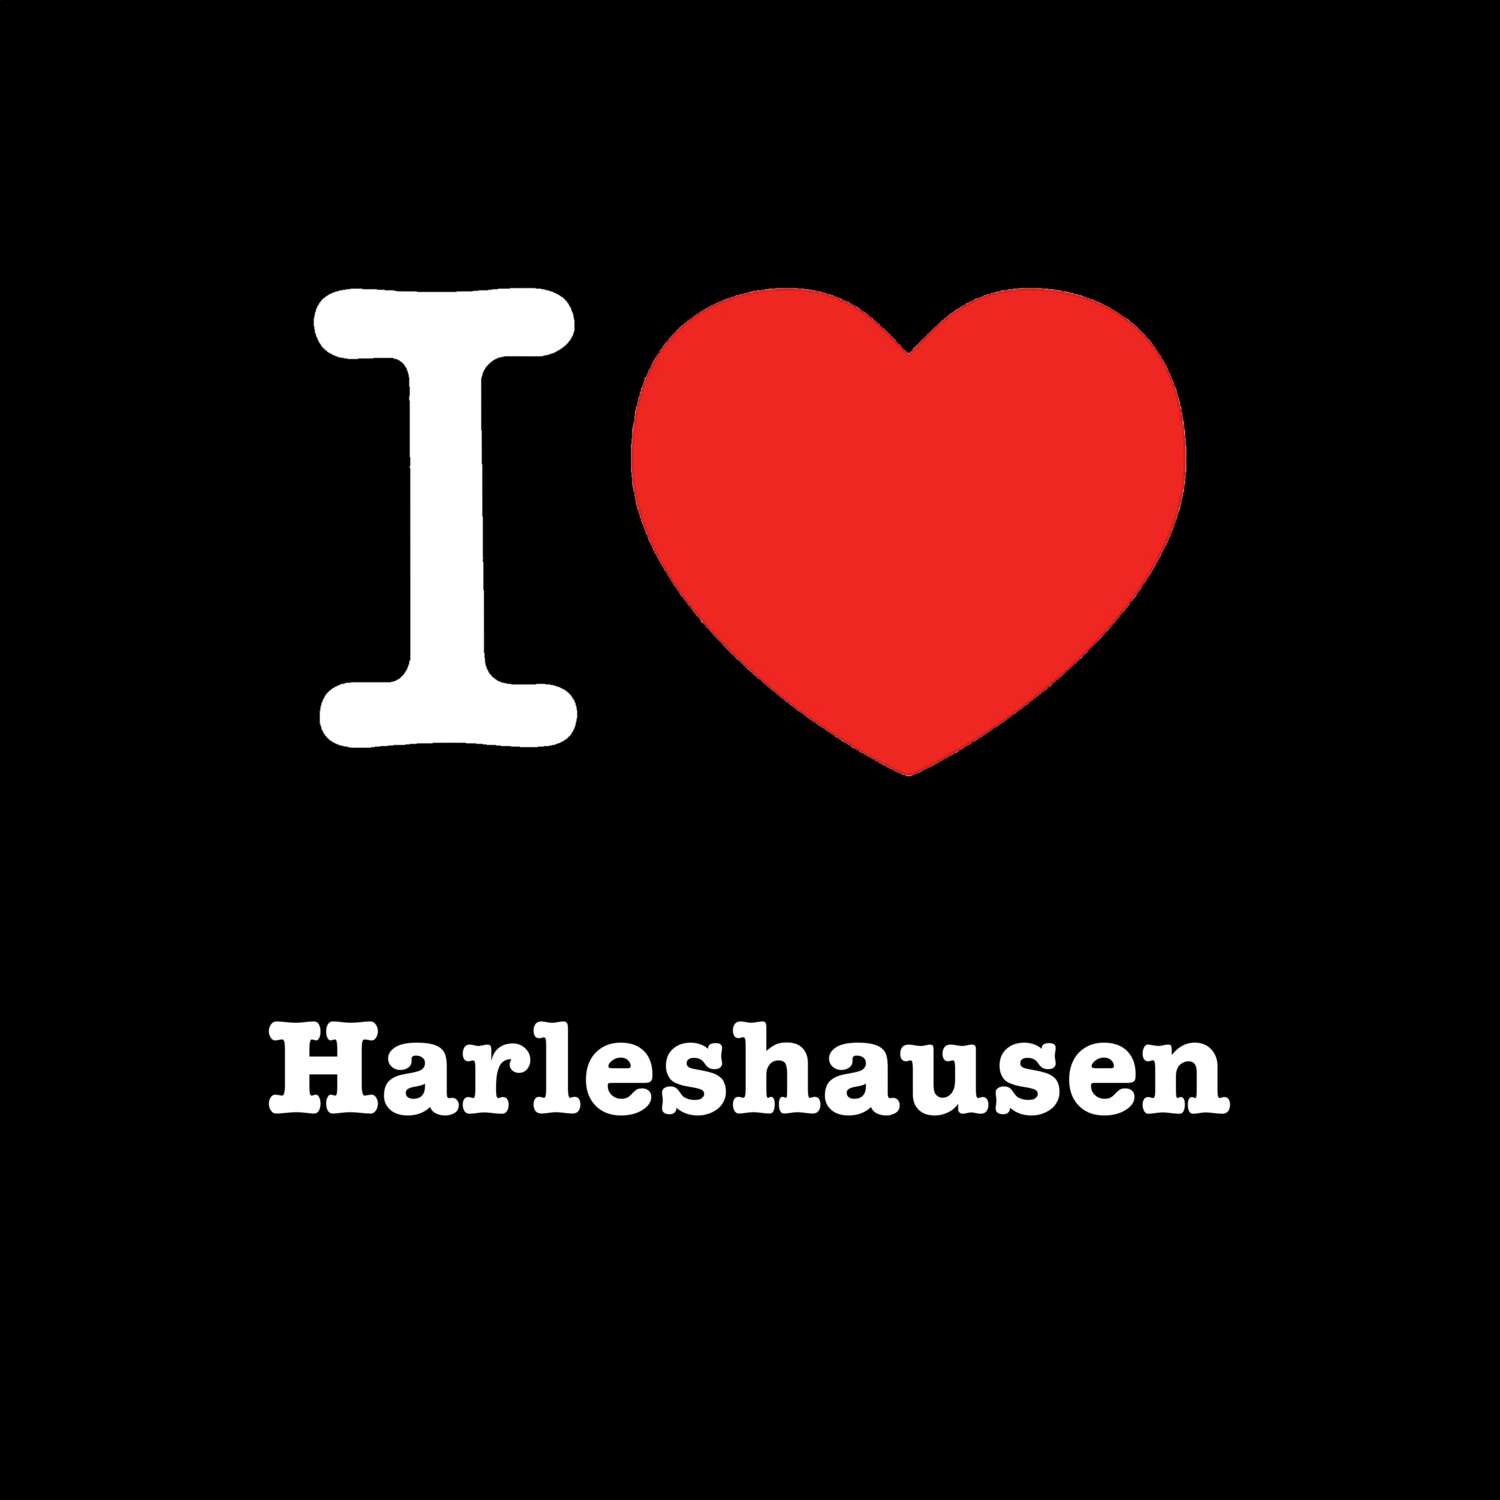 Harleshausen T-Shirt »I love«